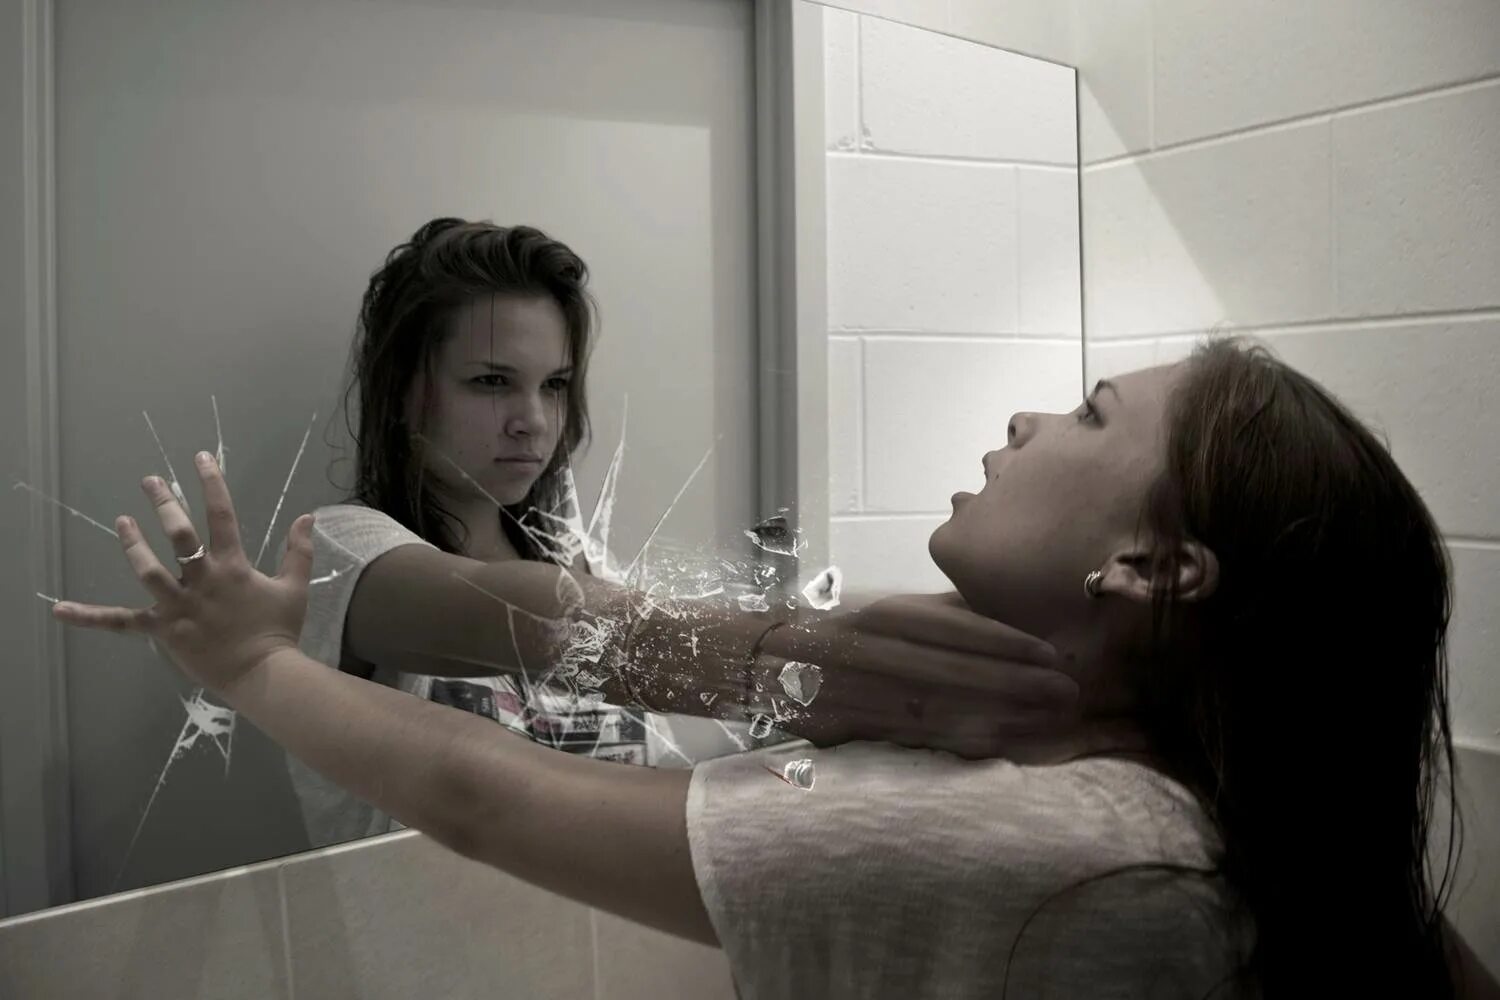 Отражение в зеркале. Человек отражается в зеркале. Девушка в отражении. Человек в разбитом зеркале.